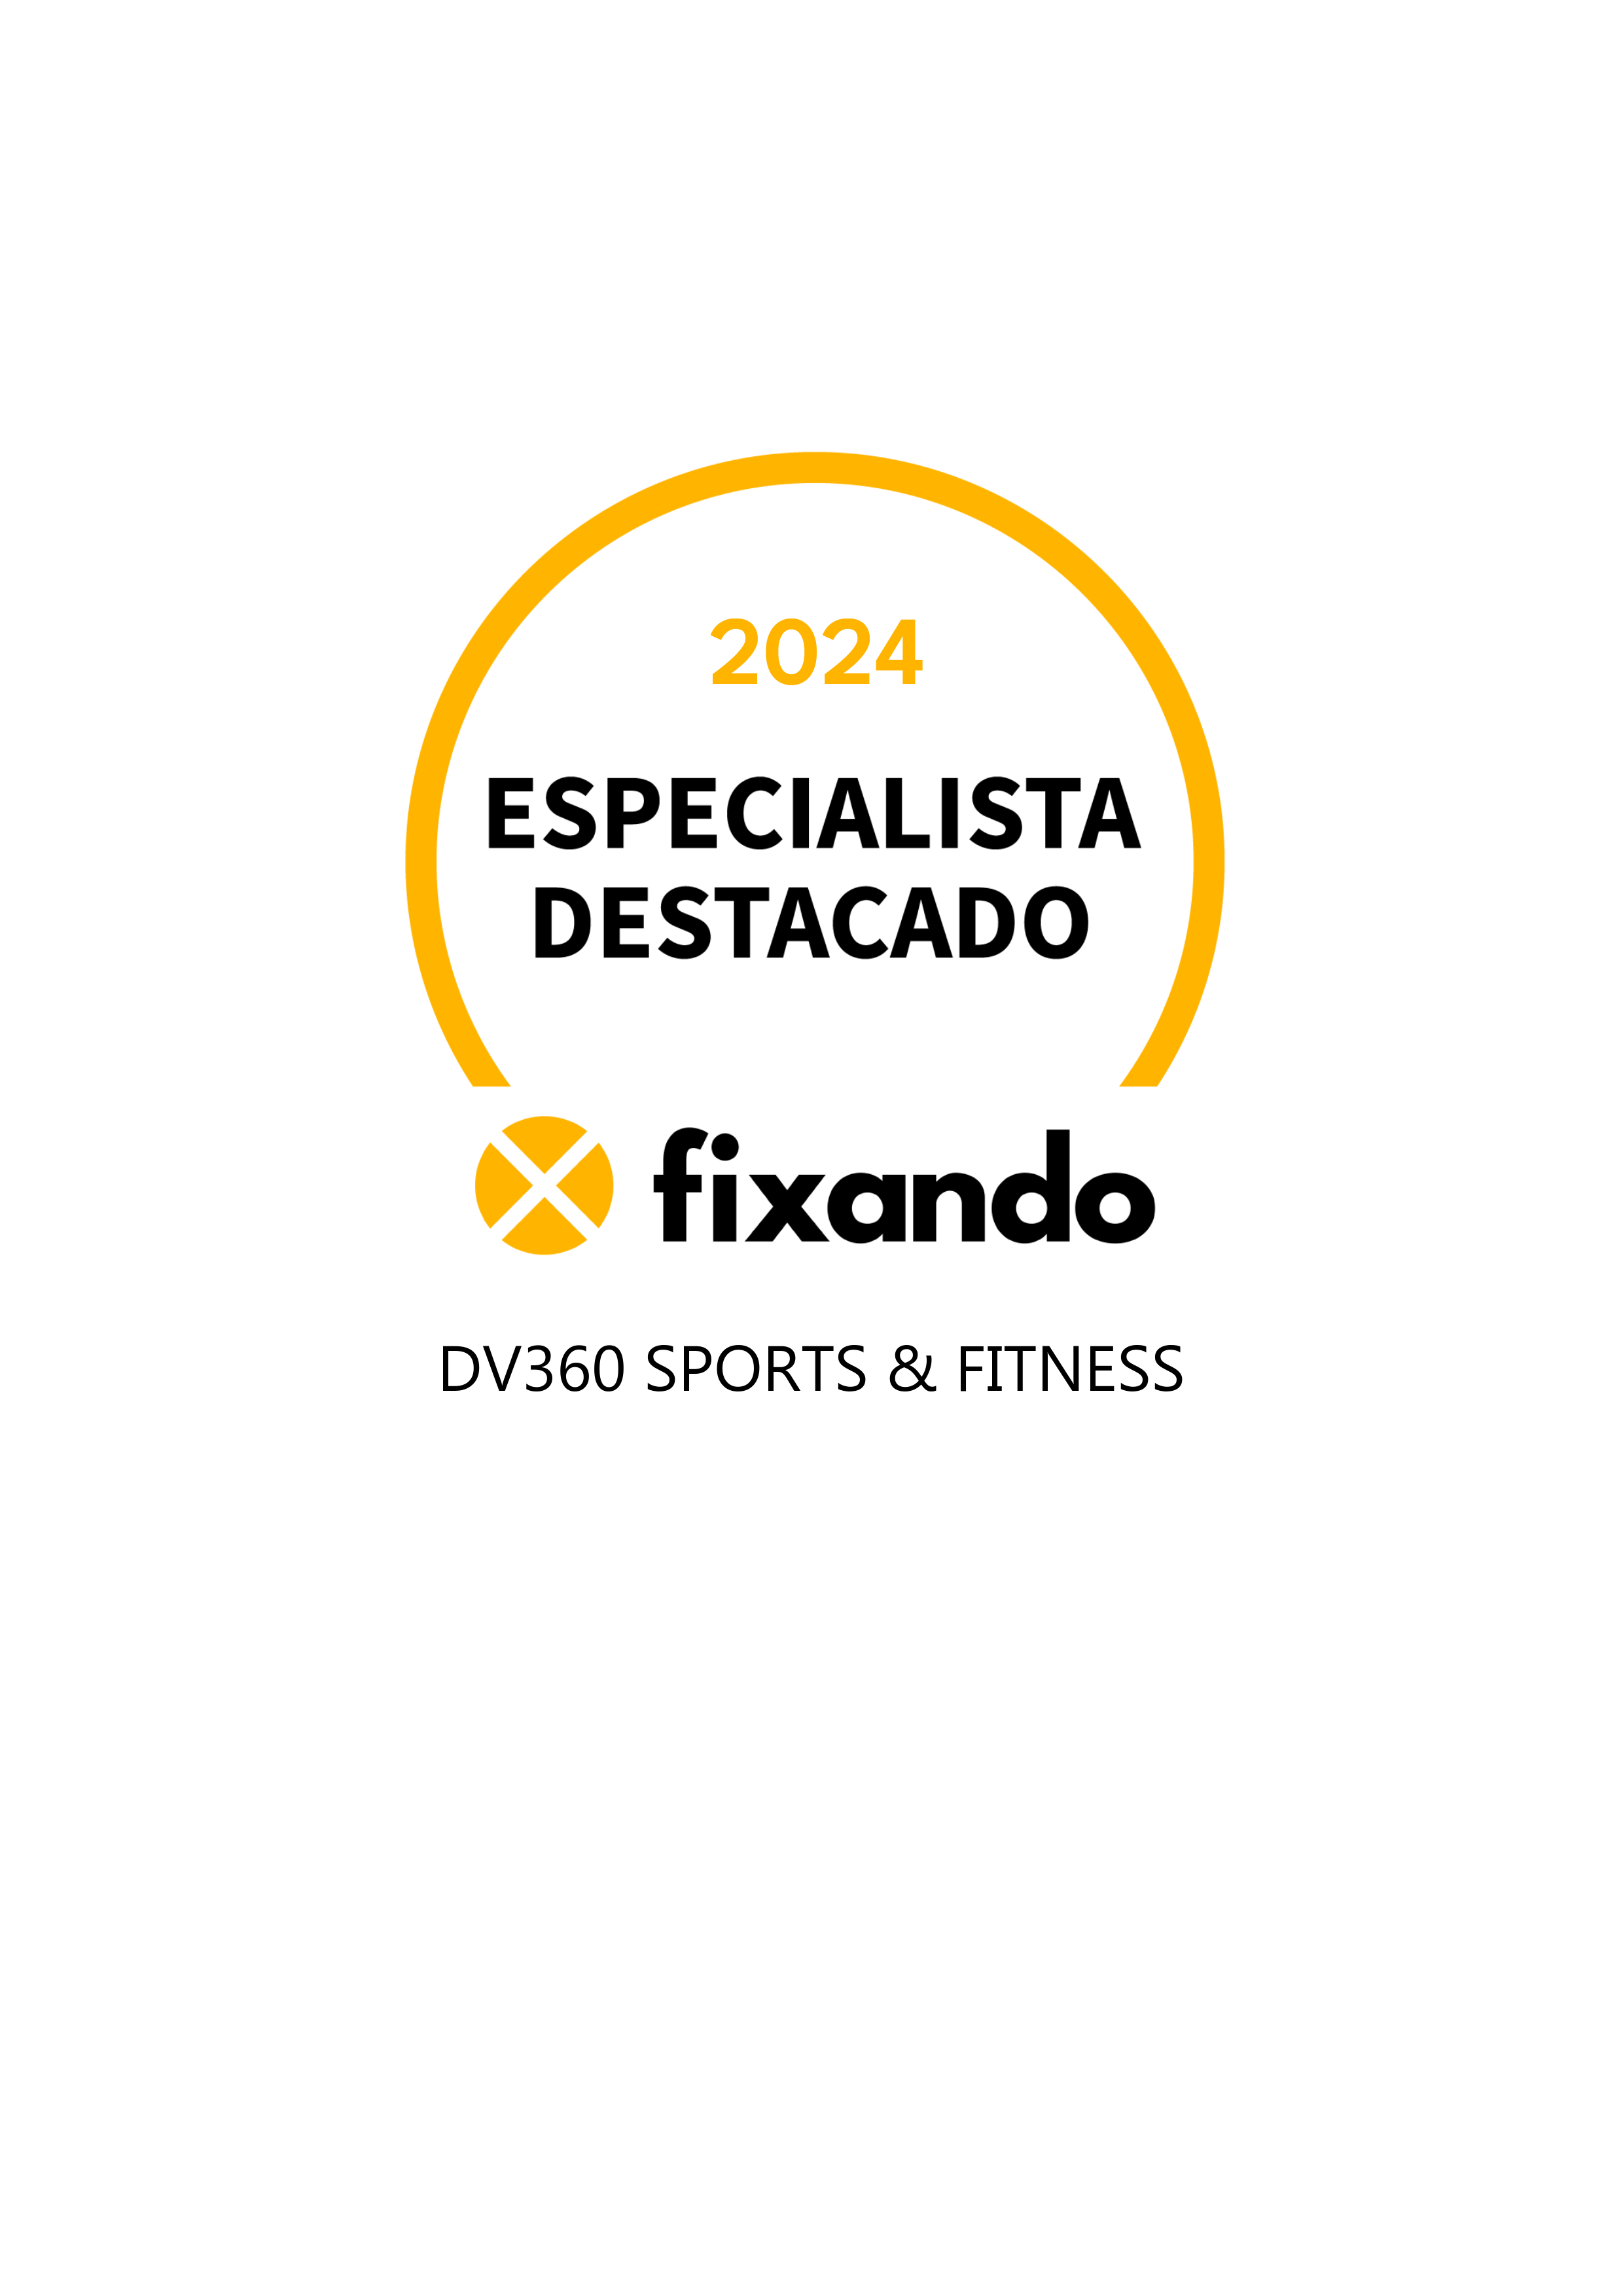 DV360 Sports & Fitness - Lisboa - Treino Intervalado de Alta Intensidade (HIIT)